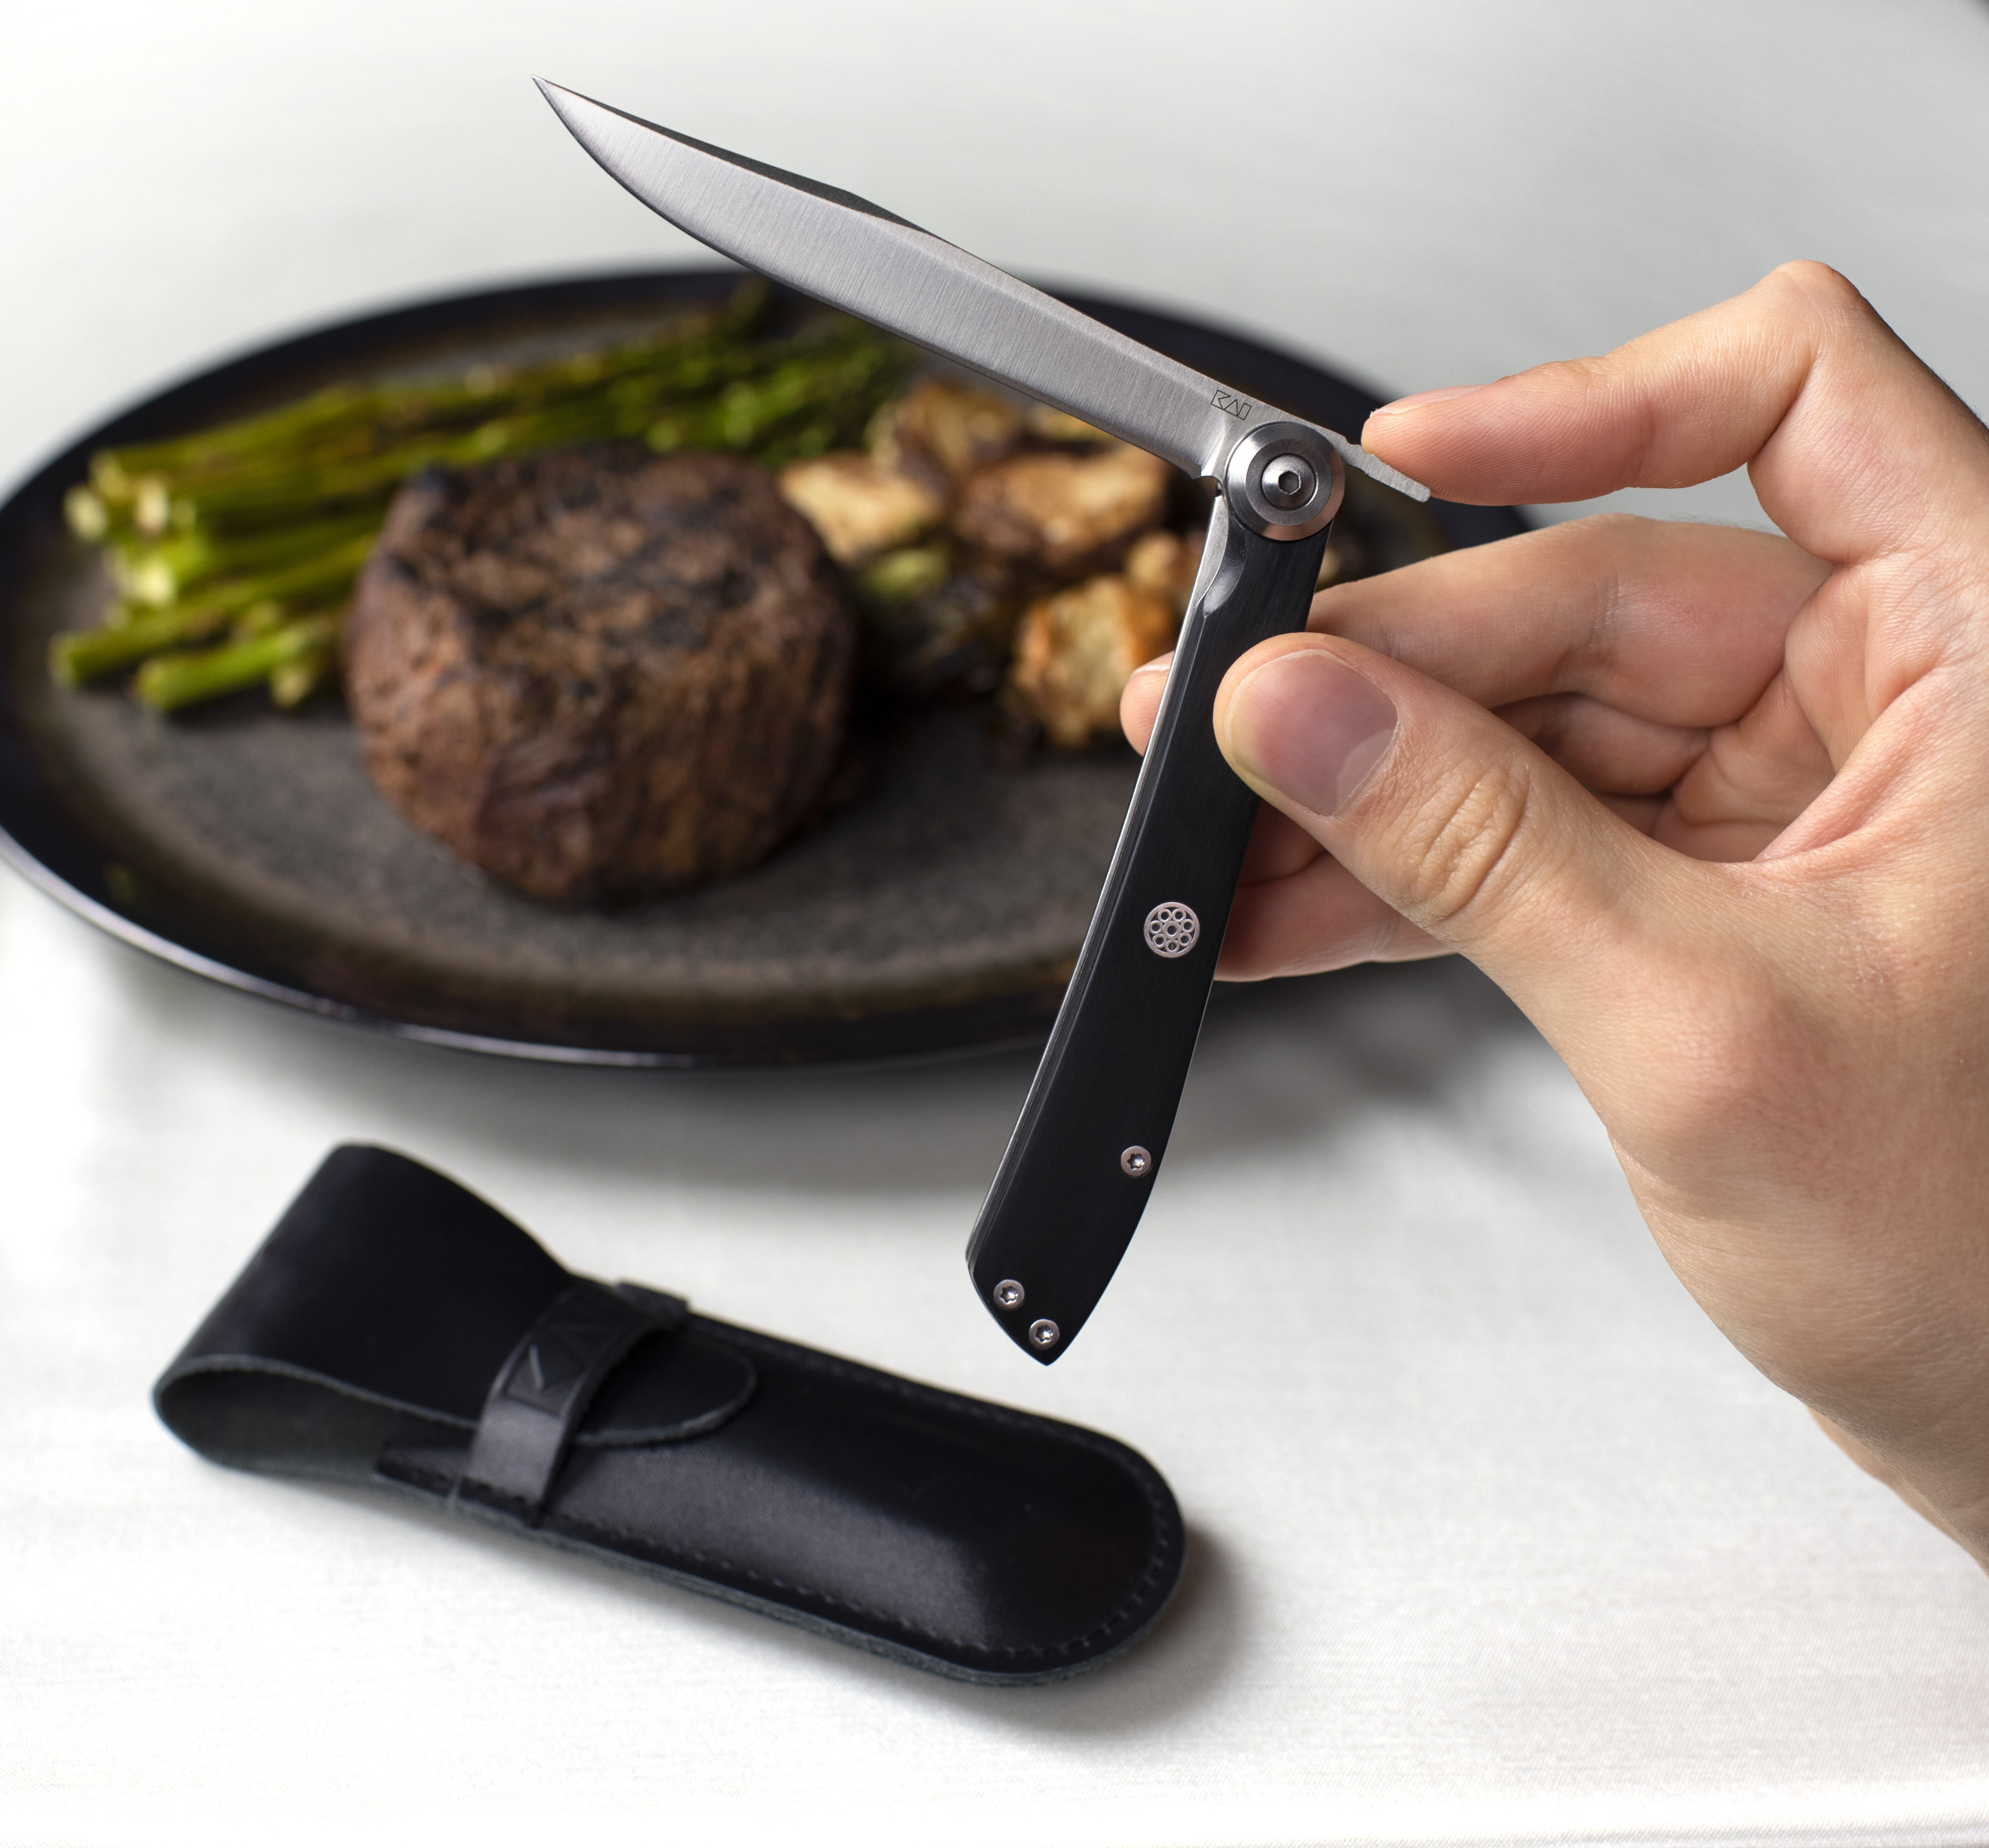 Kai Personal Folding Steak Knife